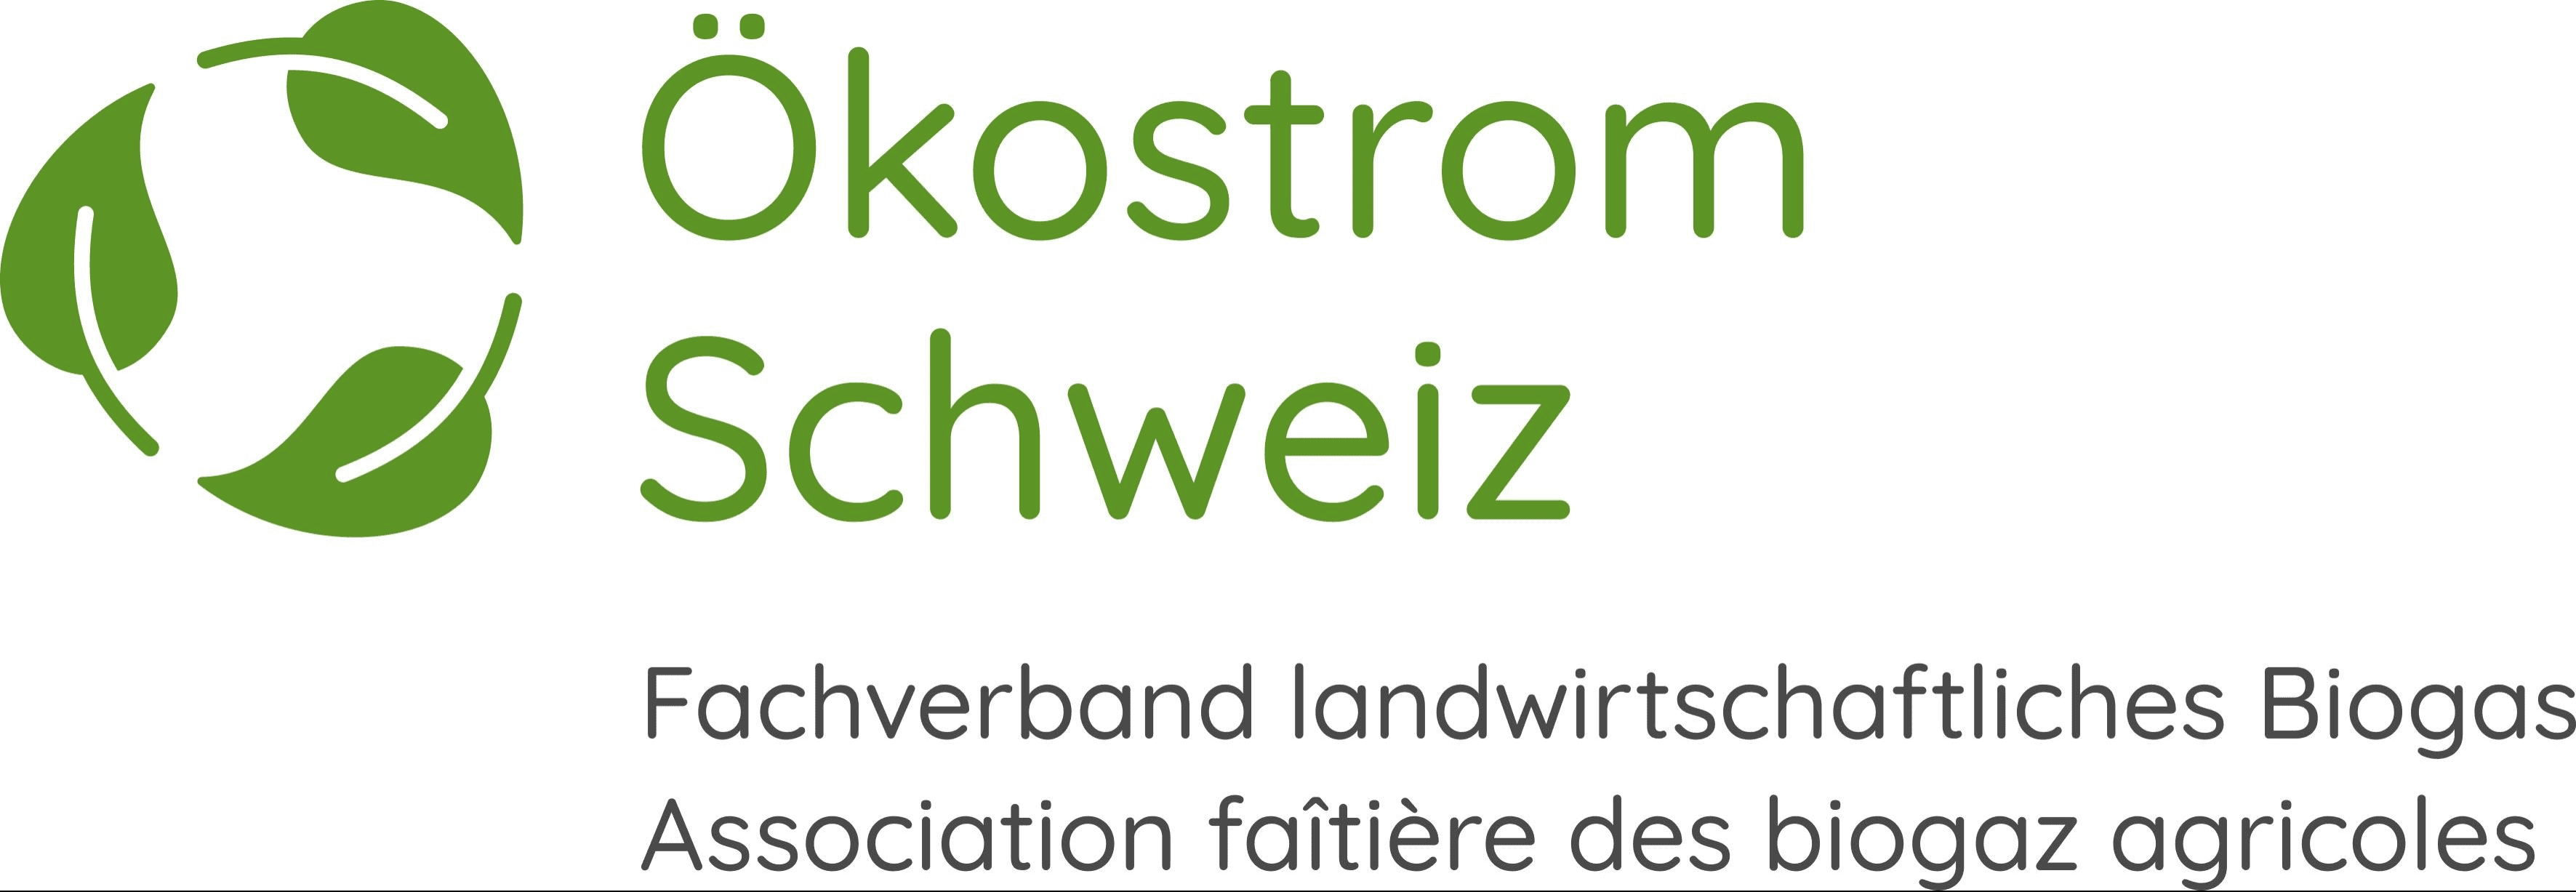 Genossenschaft Ökostrom Schweiz